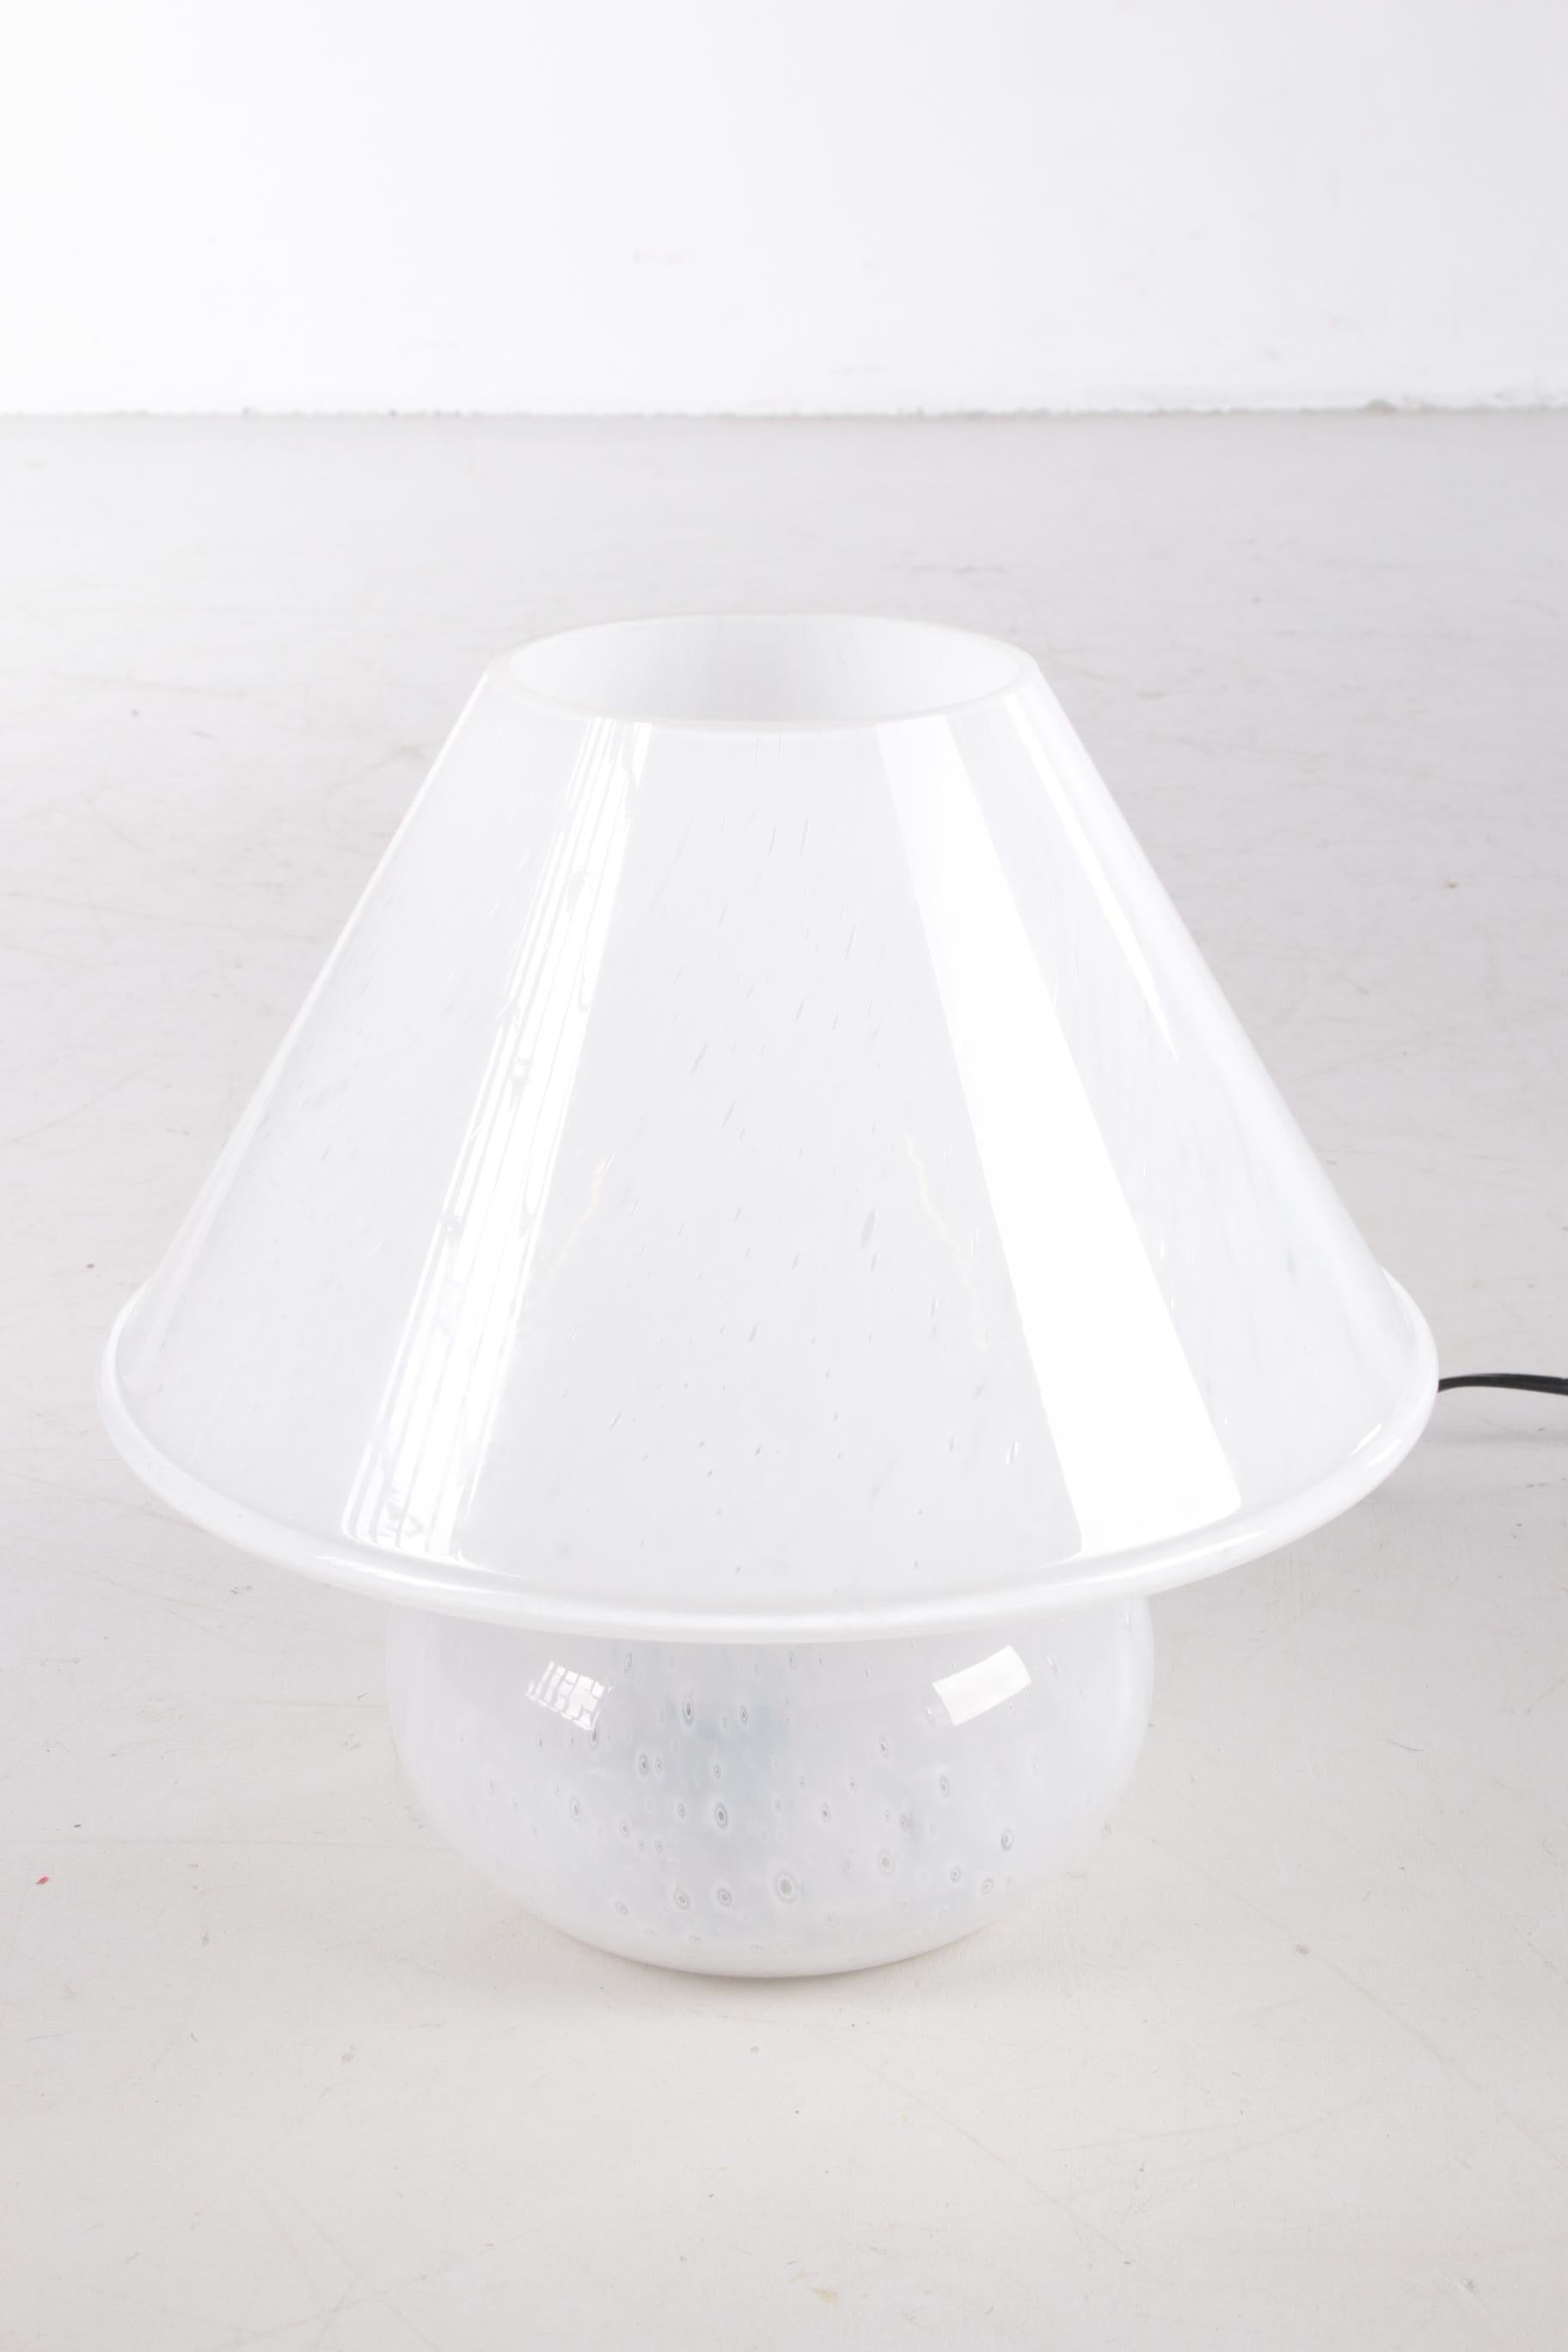 Murano table Lamp Model Mushroom by Glashutte Limburg. 1960s

Lamp 